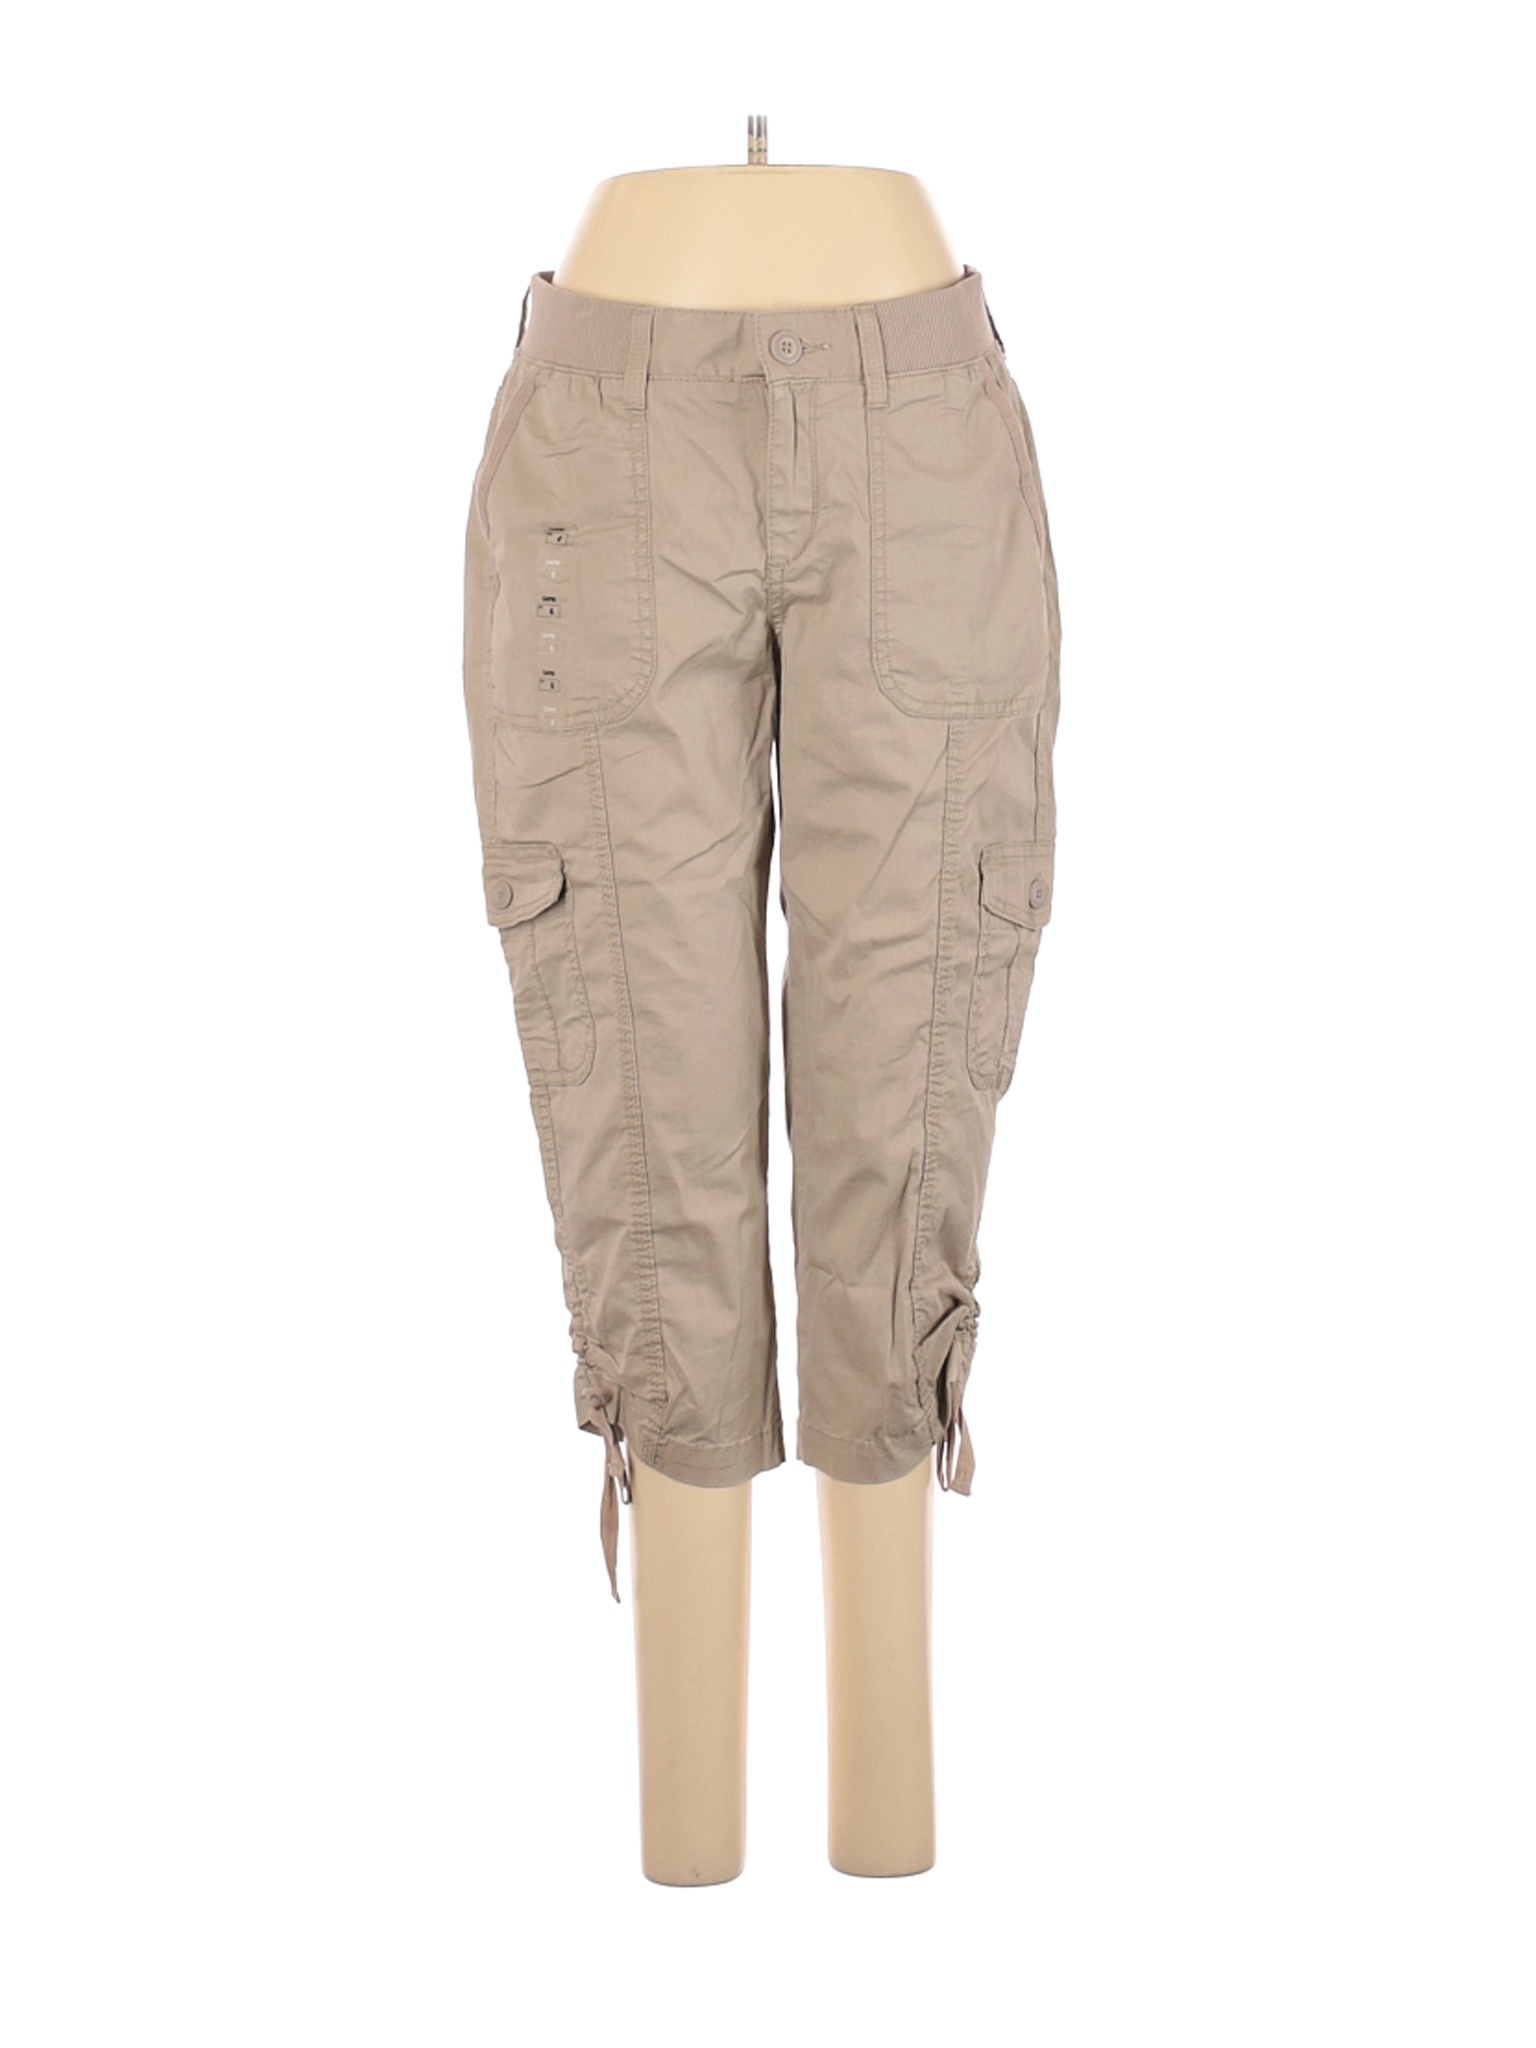 NWT Sonoma Goods for Life Women Brown Cargo Pants 6 | eBay